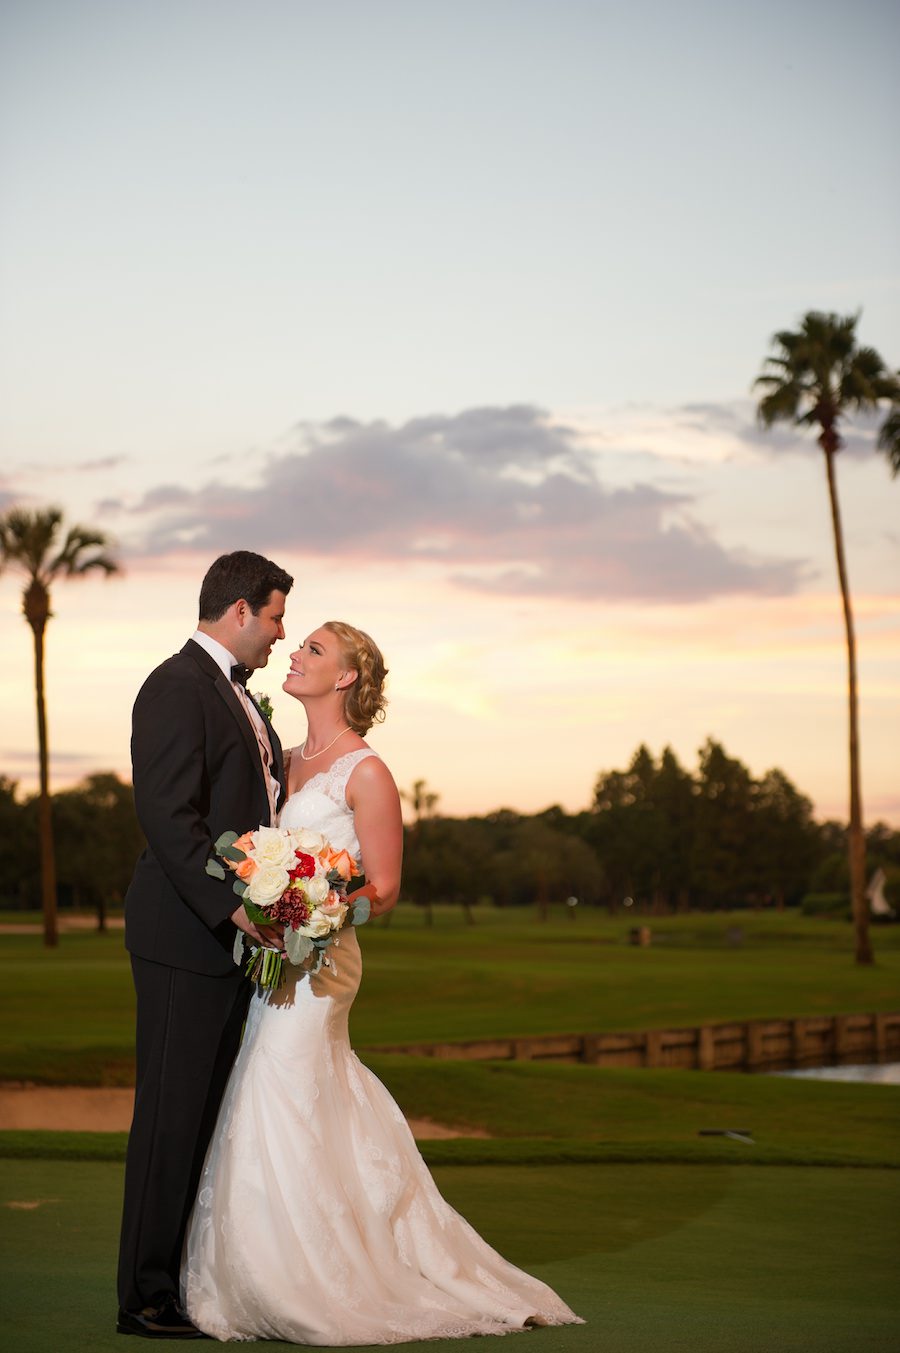 Tampa Bay Bride and Groom Wedding Portrait at Palma Ceia Country Club Wedding Venue | Tampa Bay Wedding Photographer Andi Diamond Photography